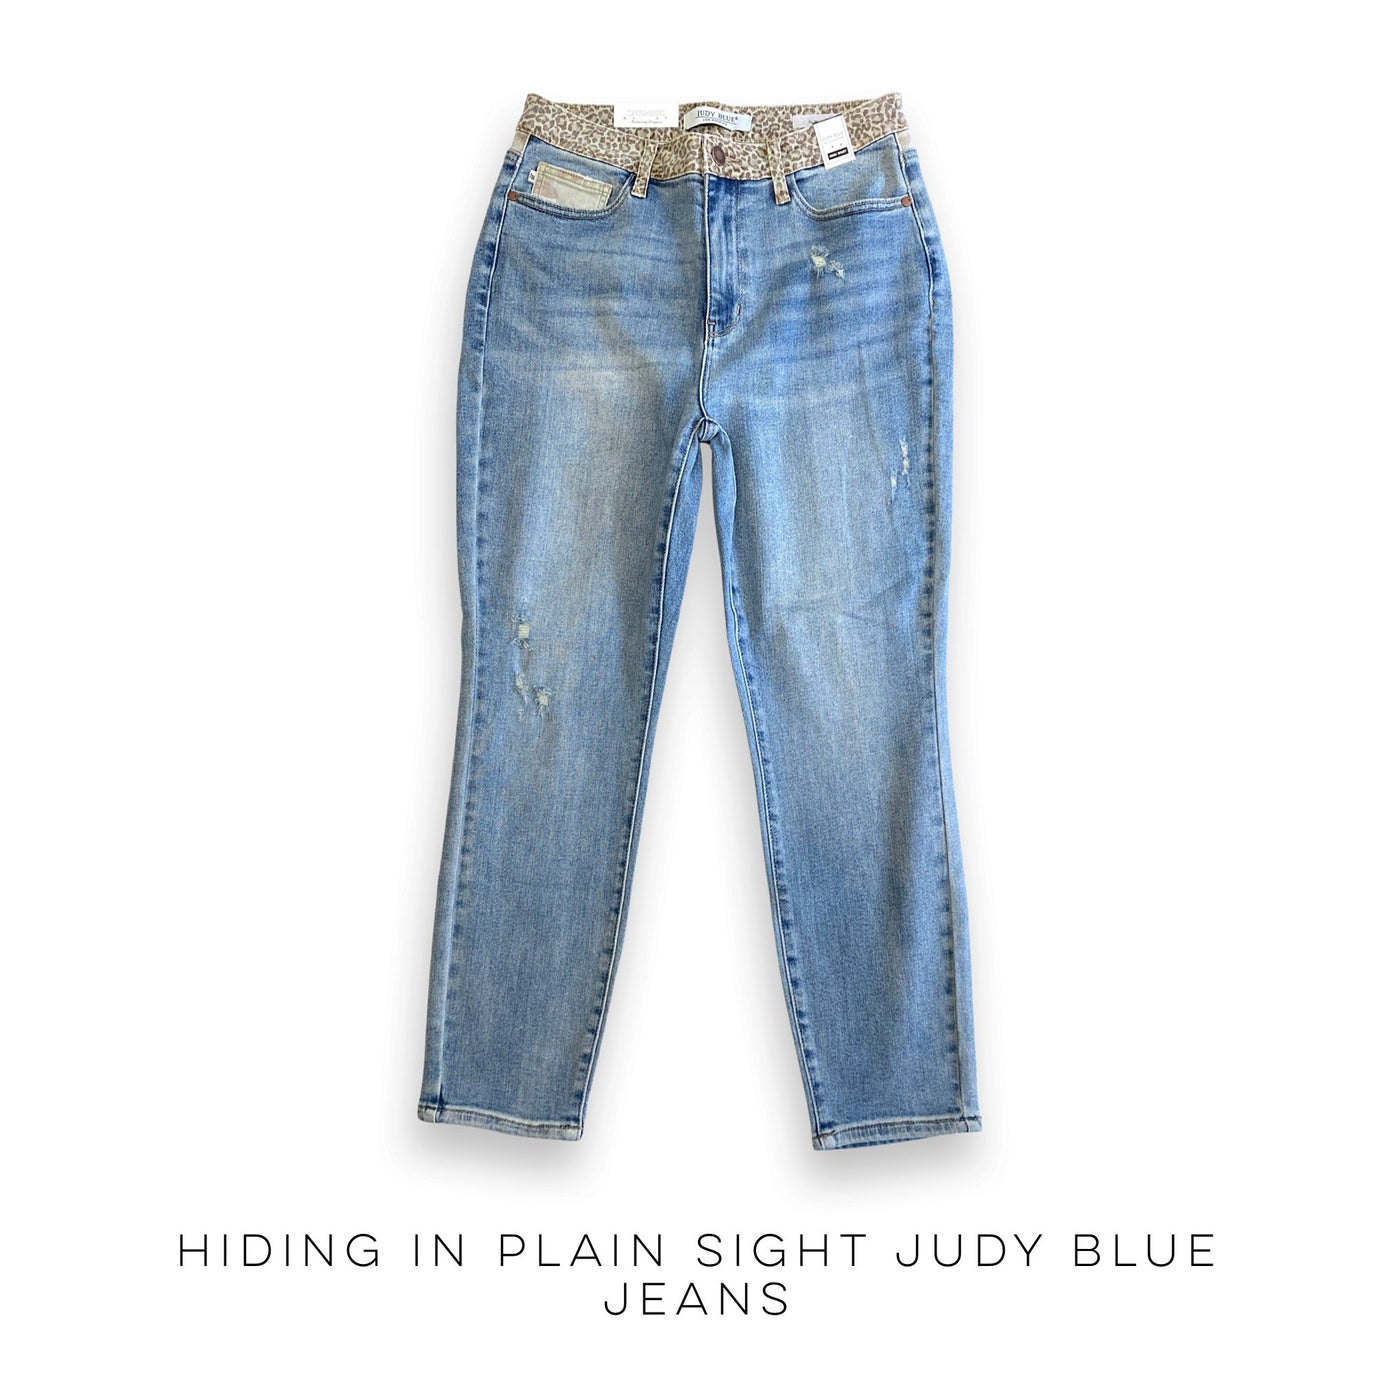 Hiding in Plain Sight Judy Blue Jeans - Copper + Rose